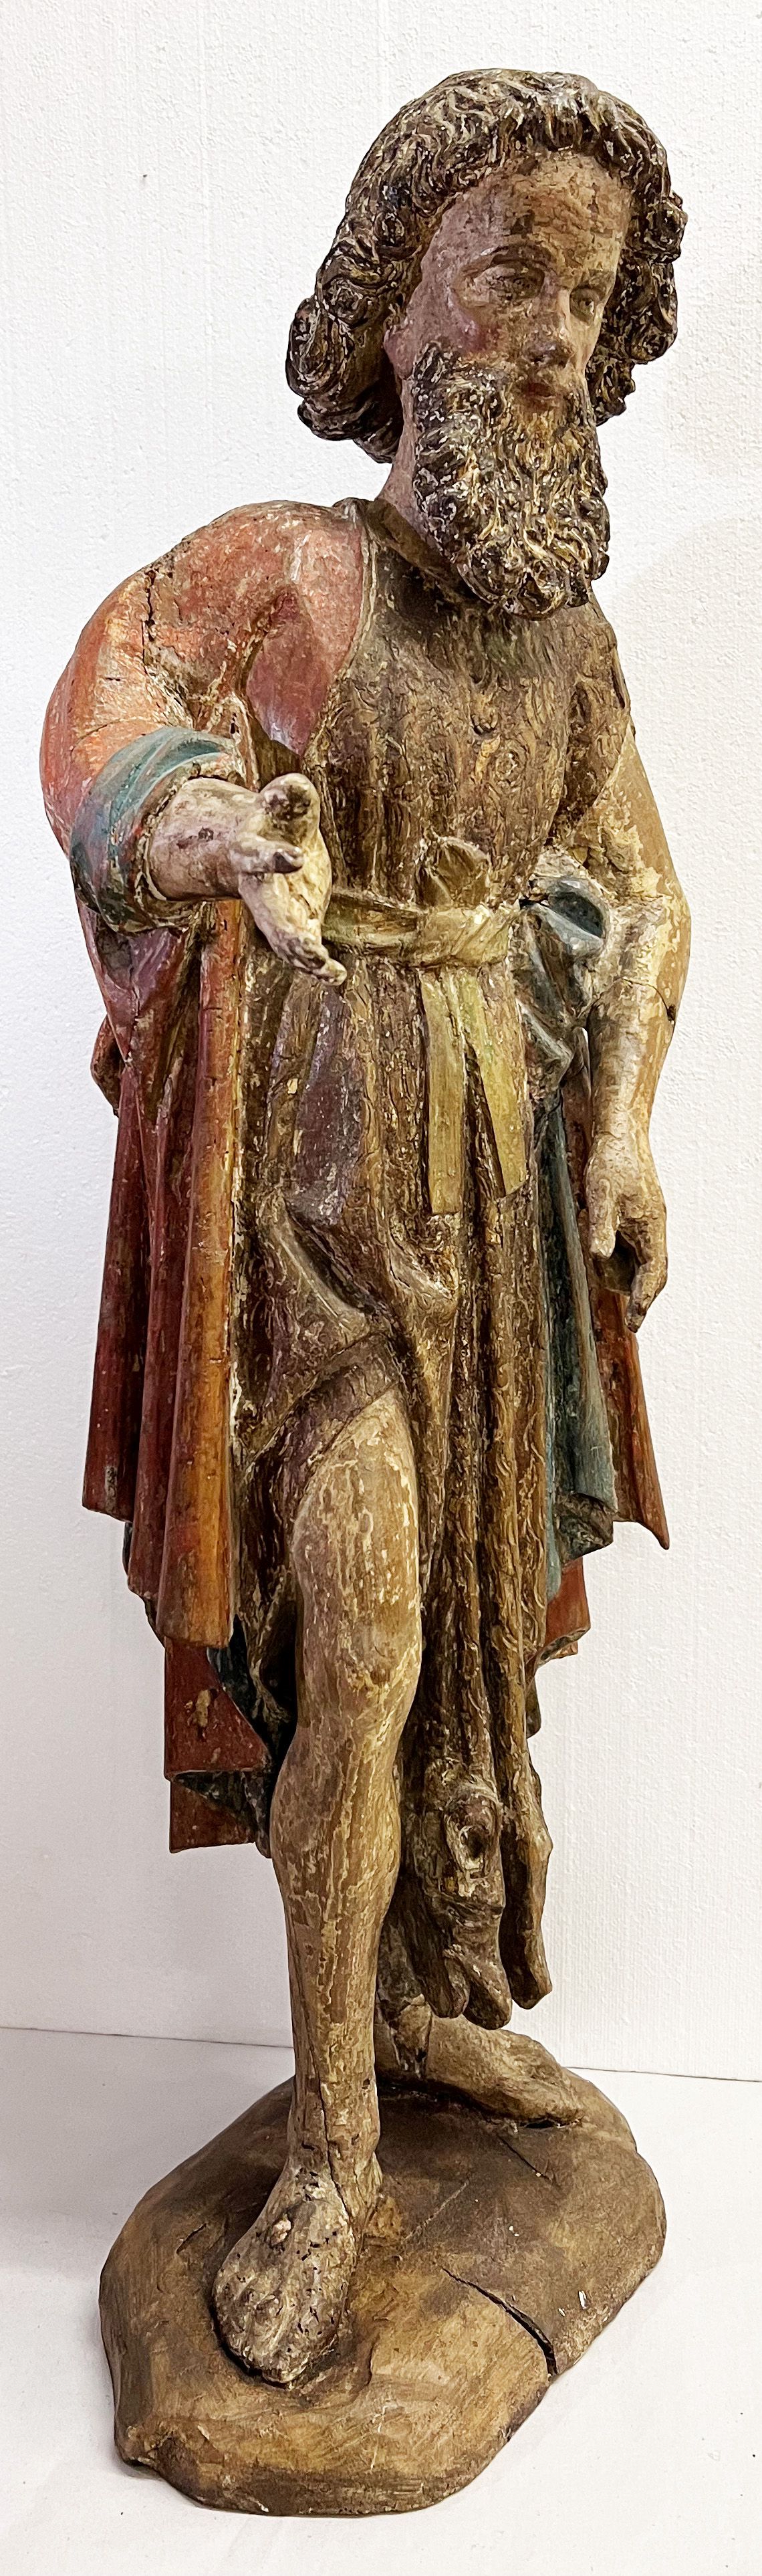 Johannes der Täufer/ St. John the Baptist. Süddeutsch, um 1470, Holz, farbig gefasst,